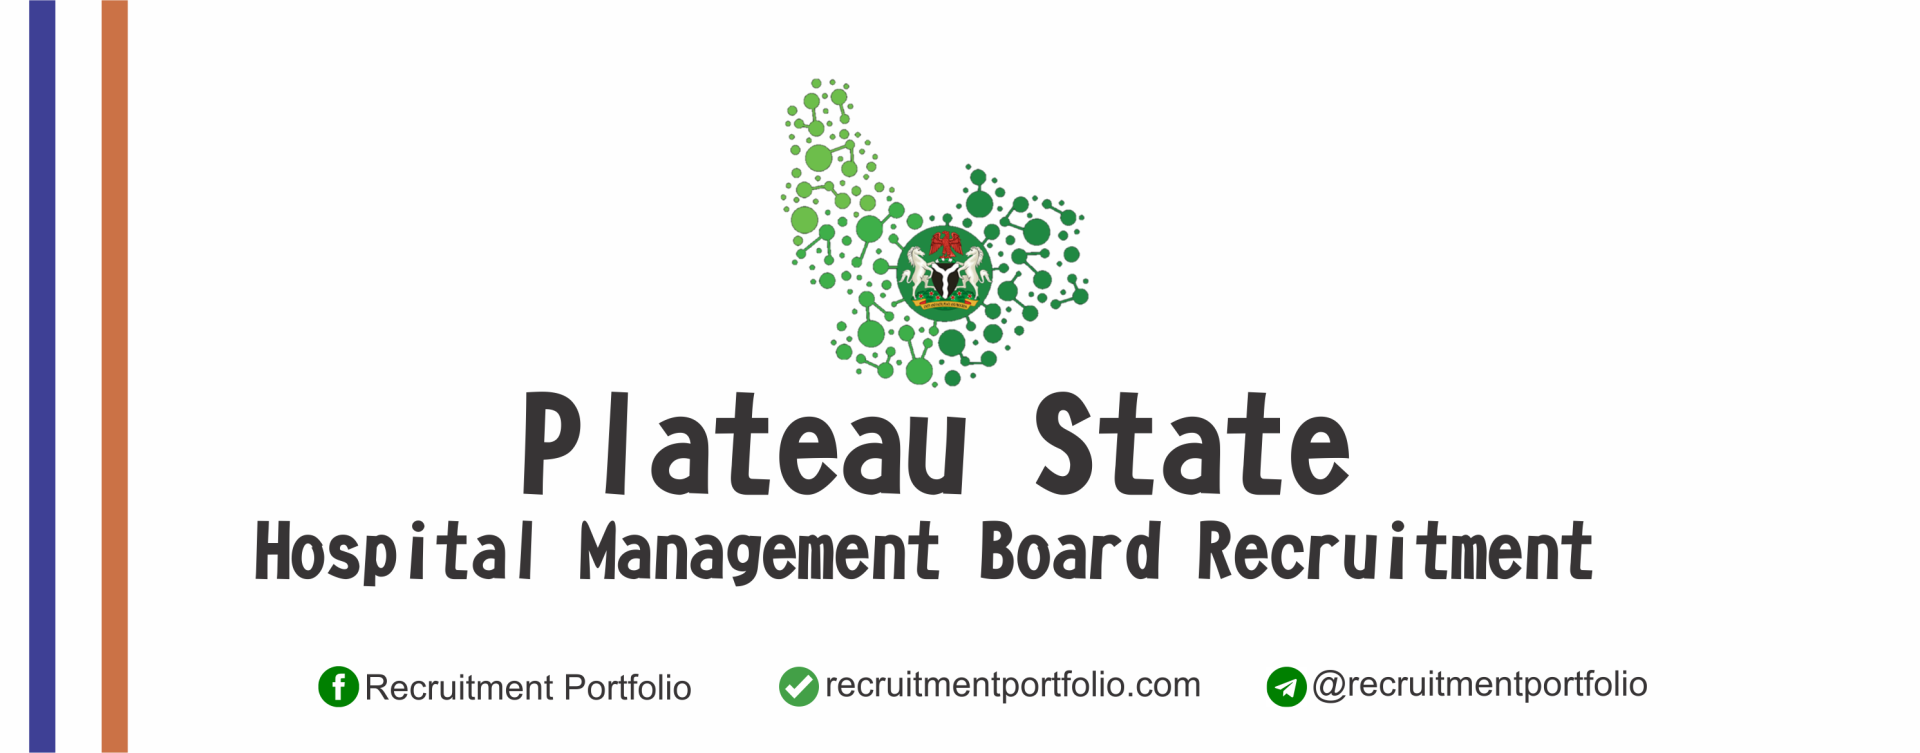 Plateau State Hospital Management Board Recruitment